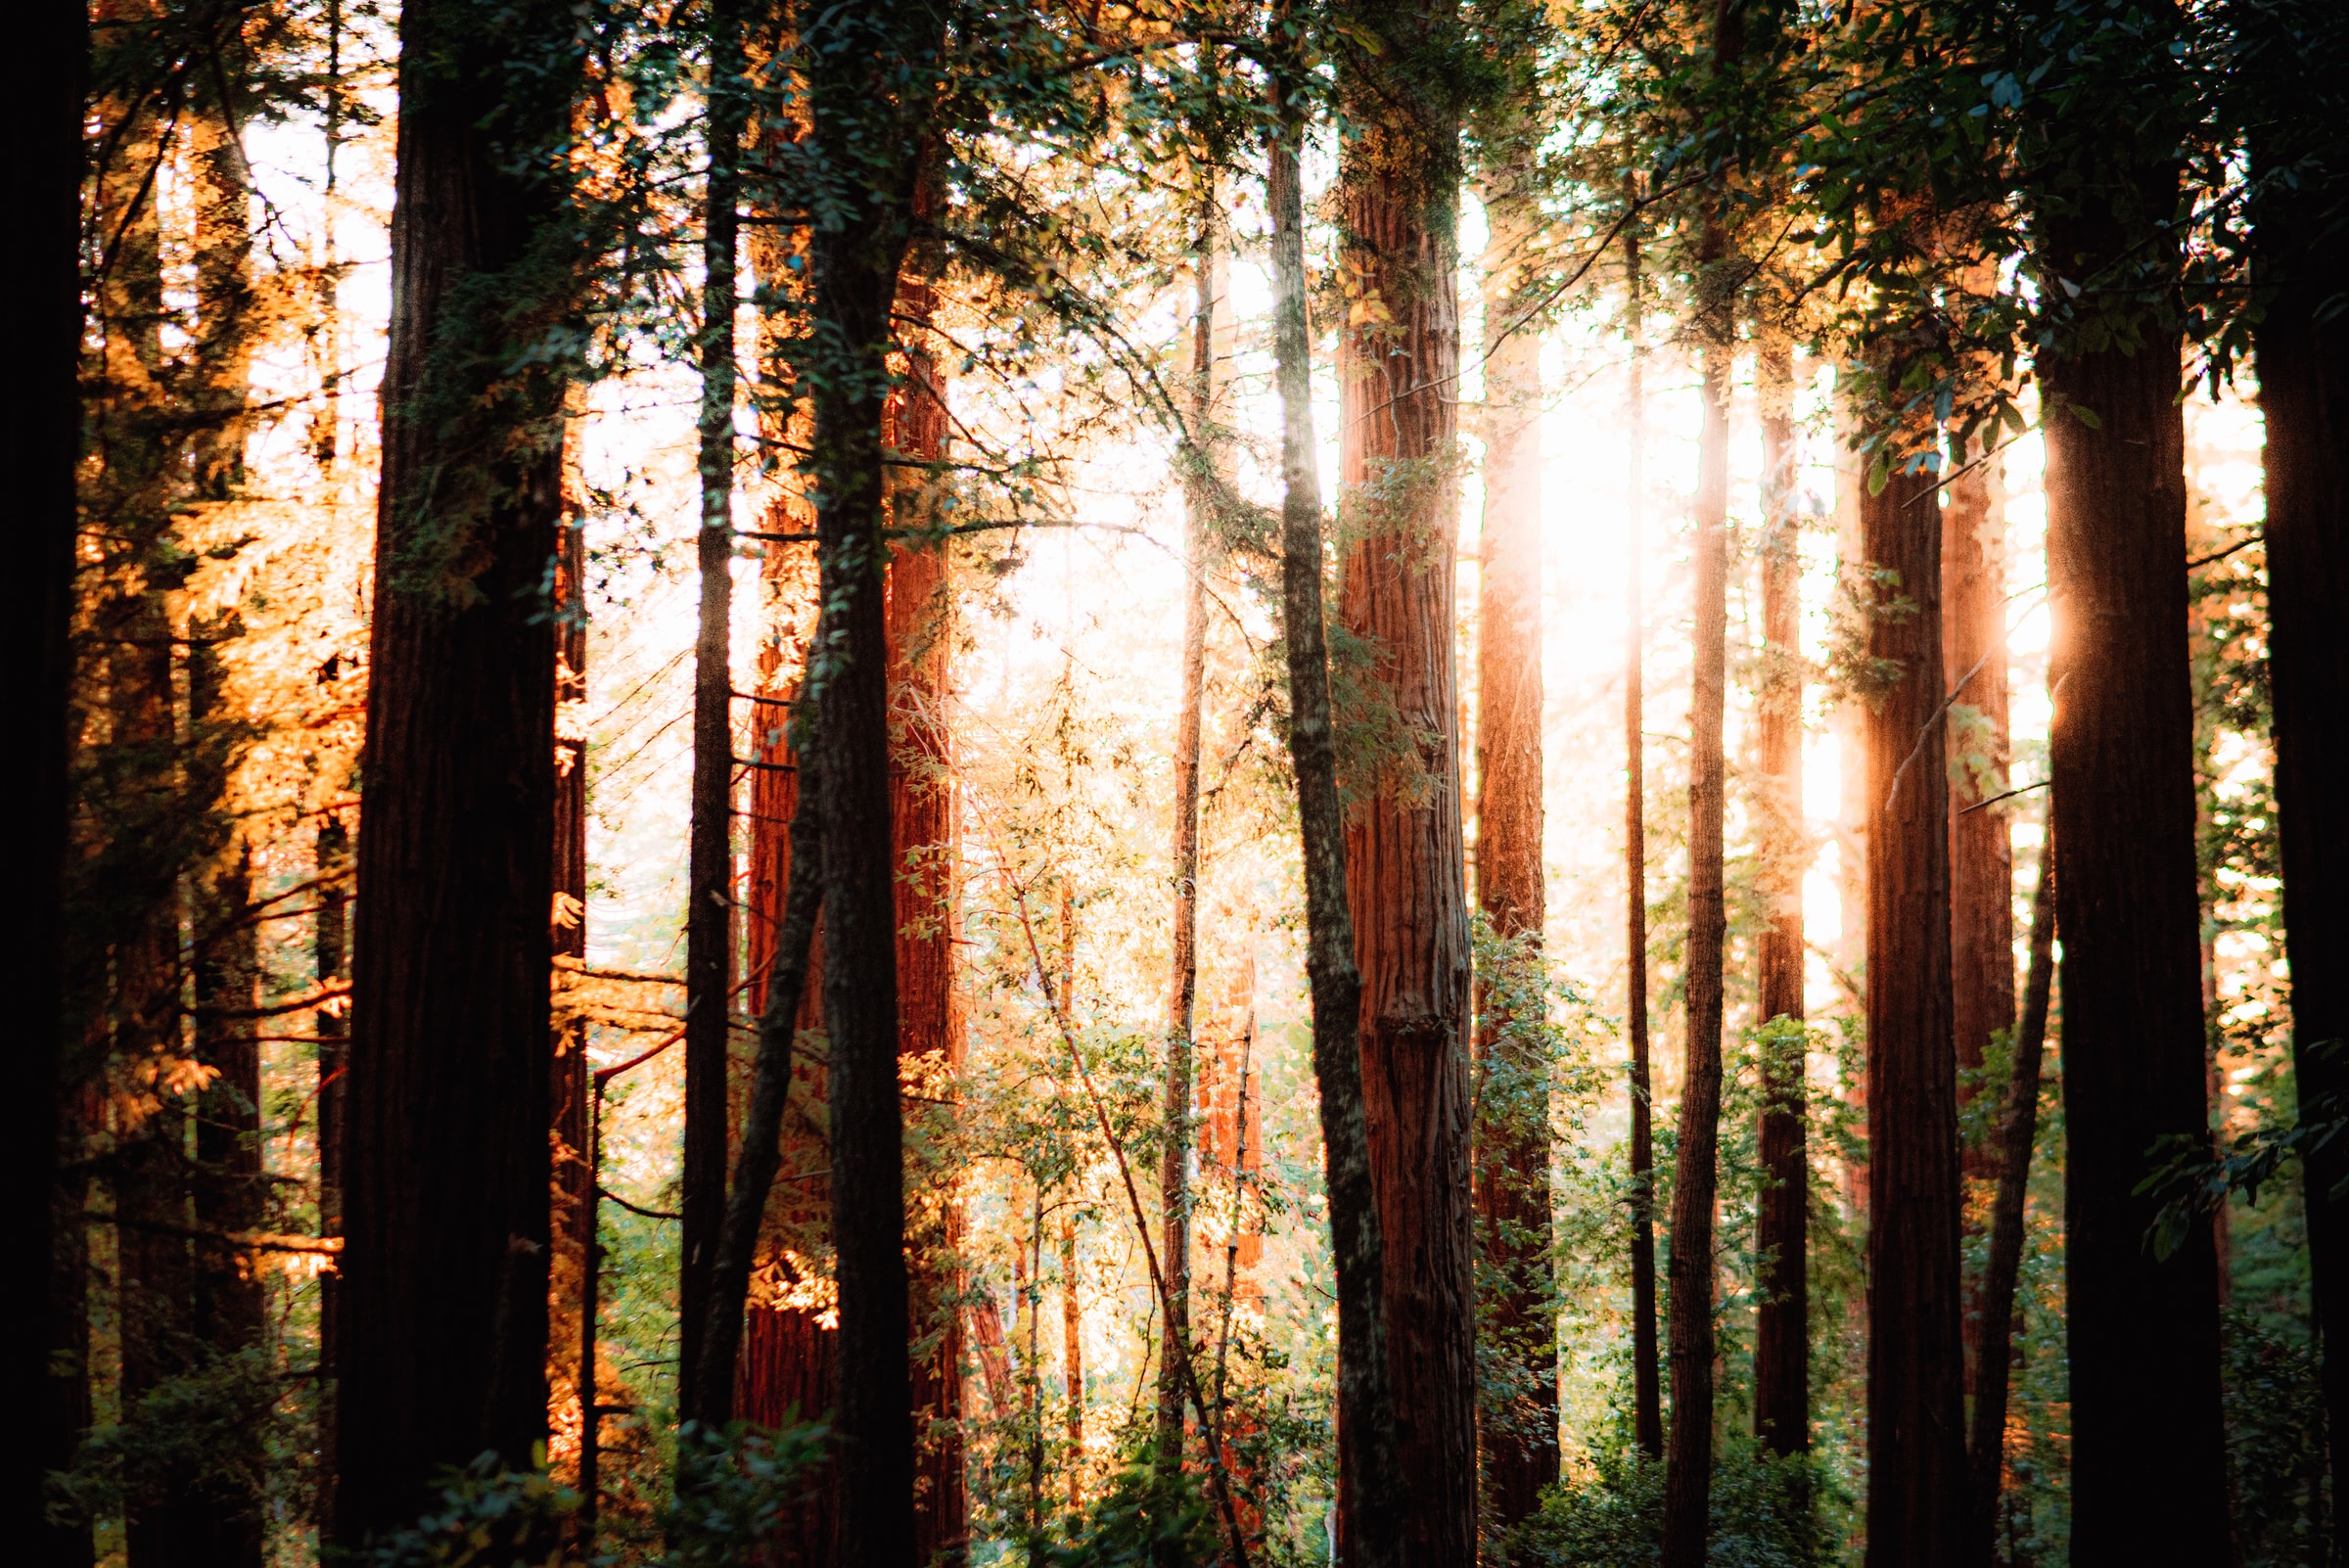 California redwood trees can grow 100 feet tall in 50 years. Photo by Jordan M. Lomibao on Unsplash